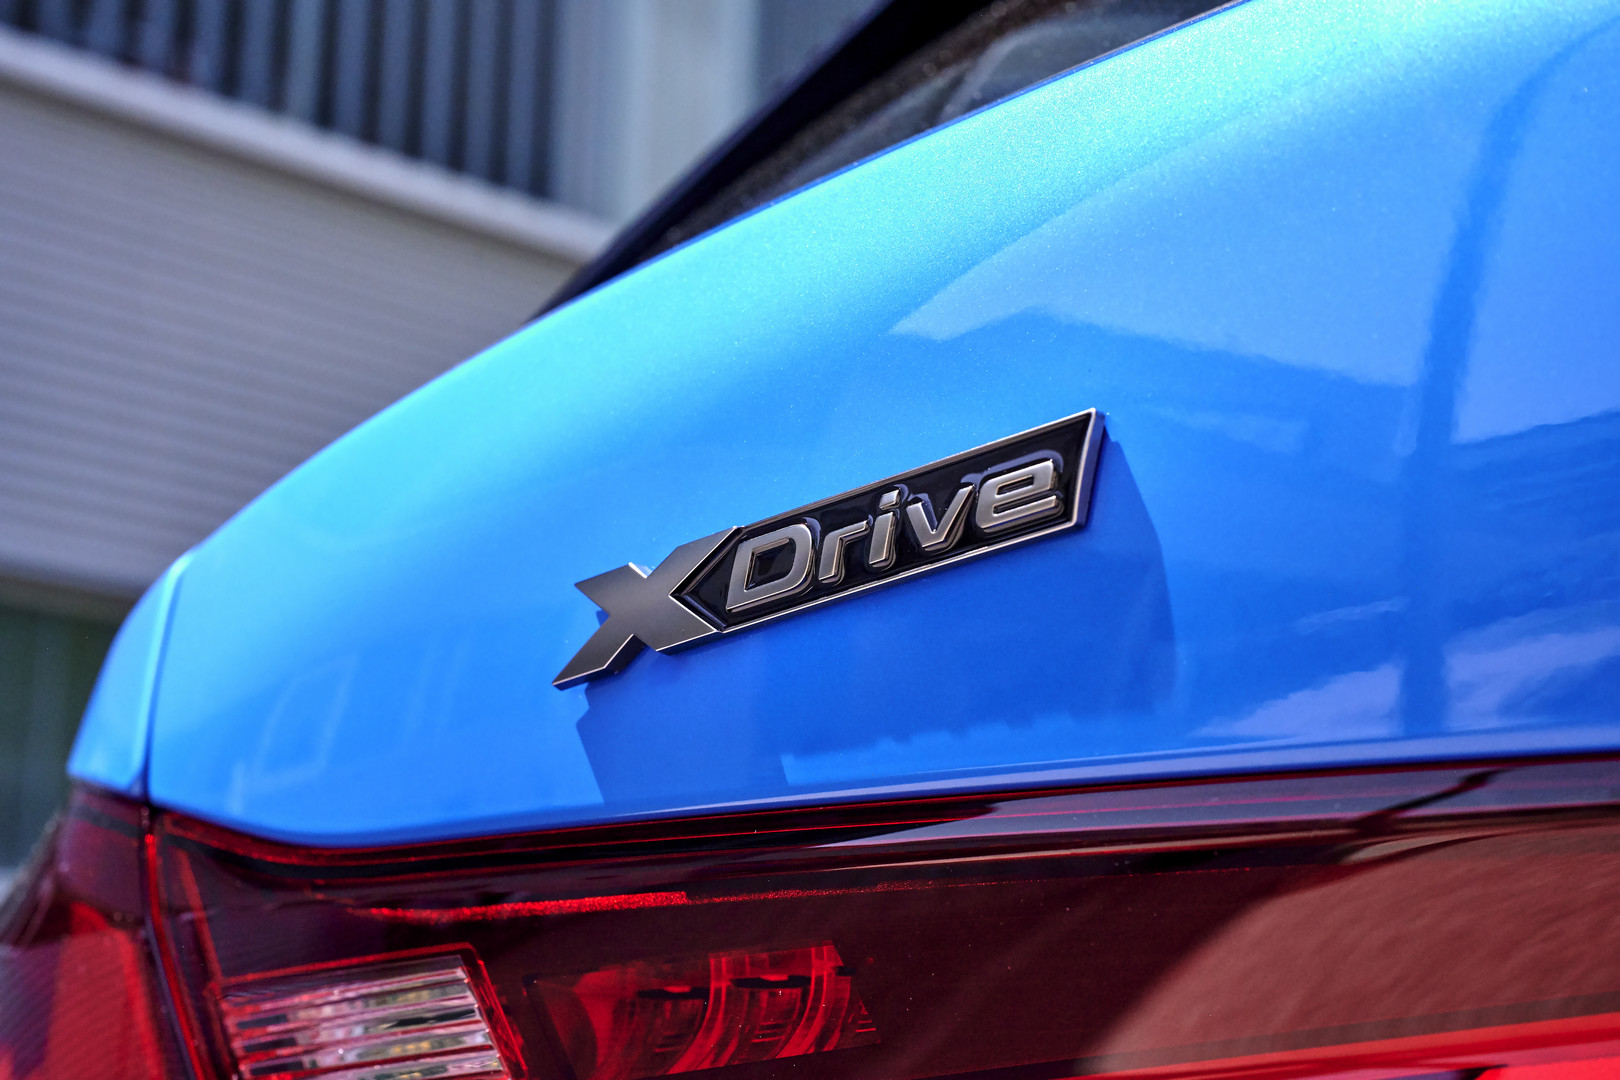 BMW xDrive Badge